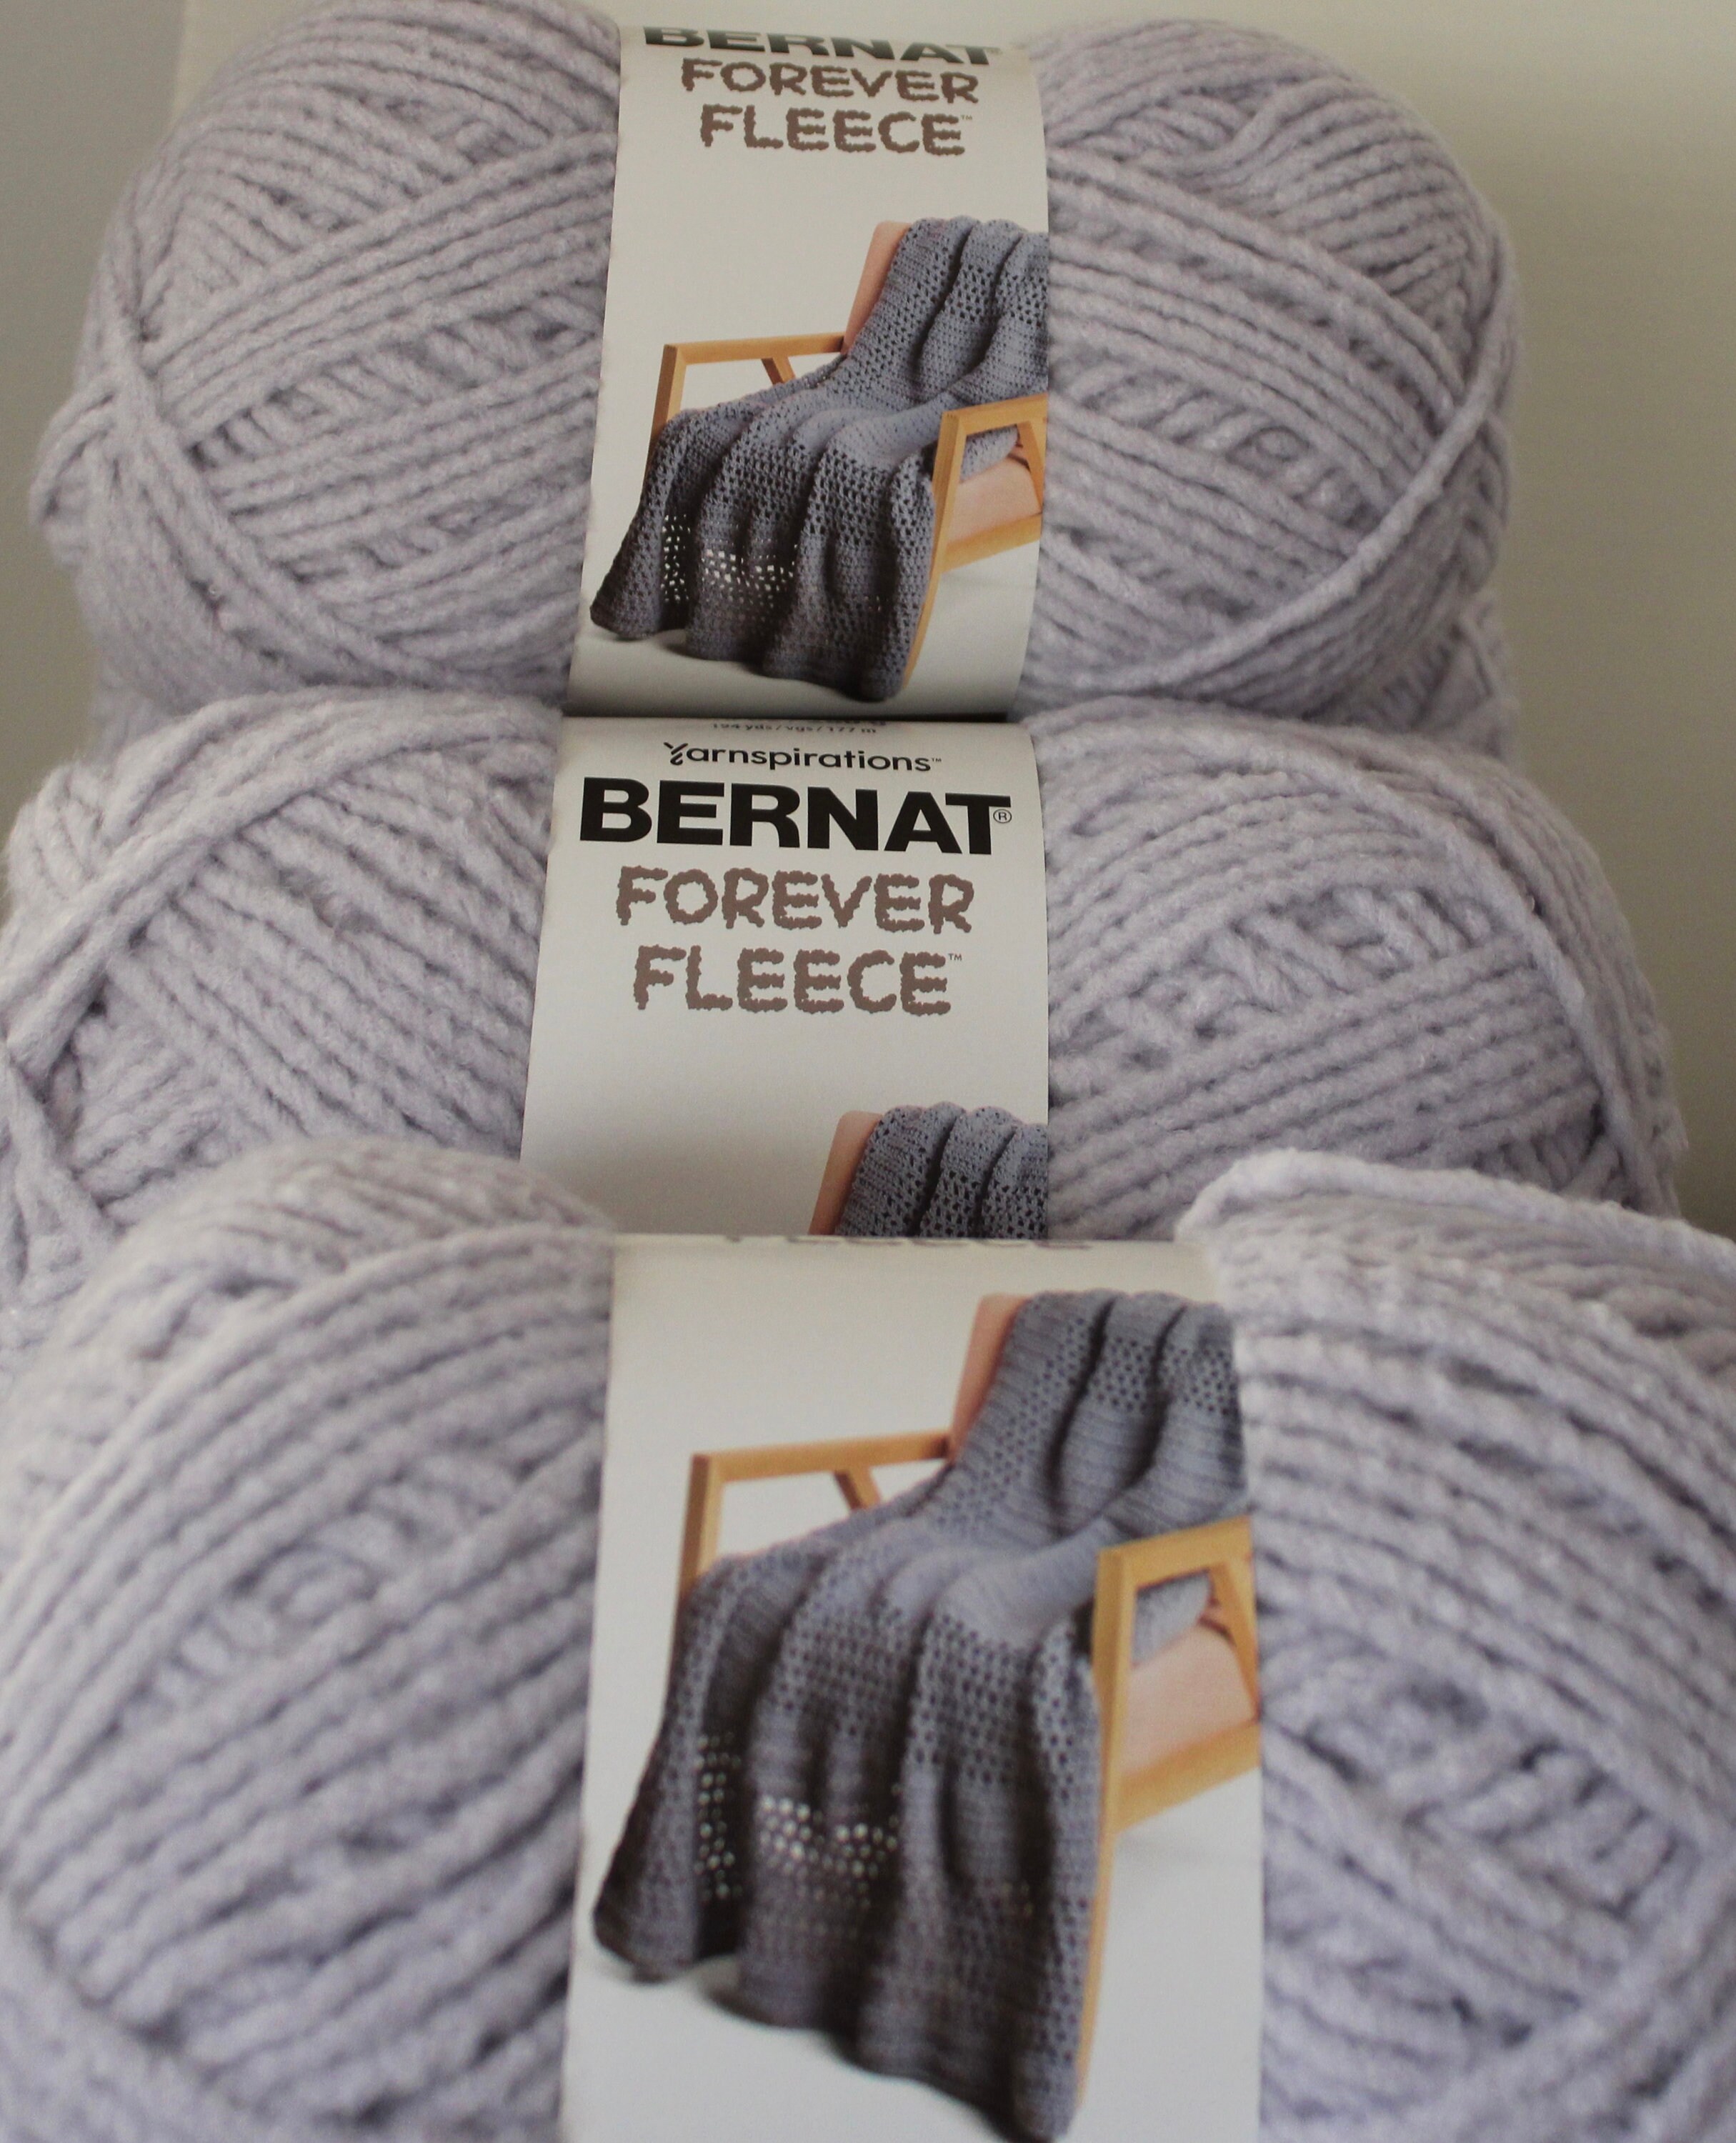 Bernat Bundle Up Big Ball 8.8 oz Lavender Knitting & Crochet Yarn